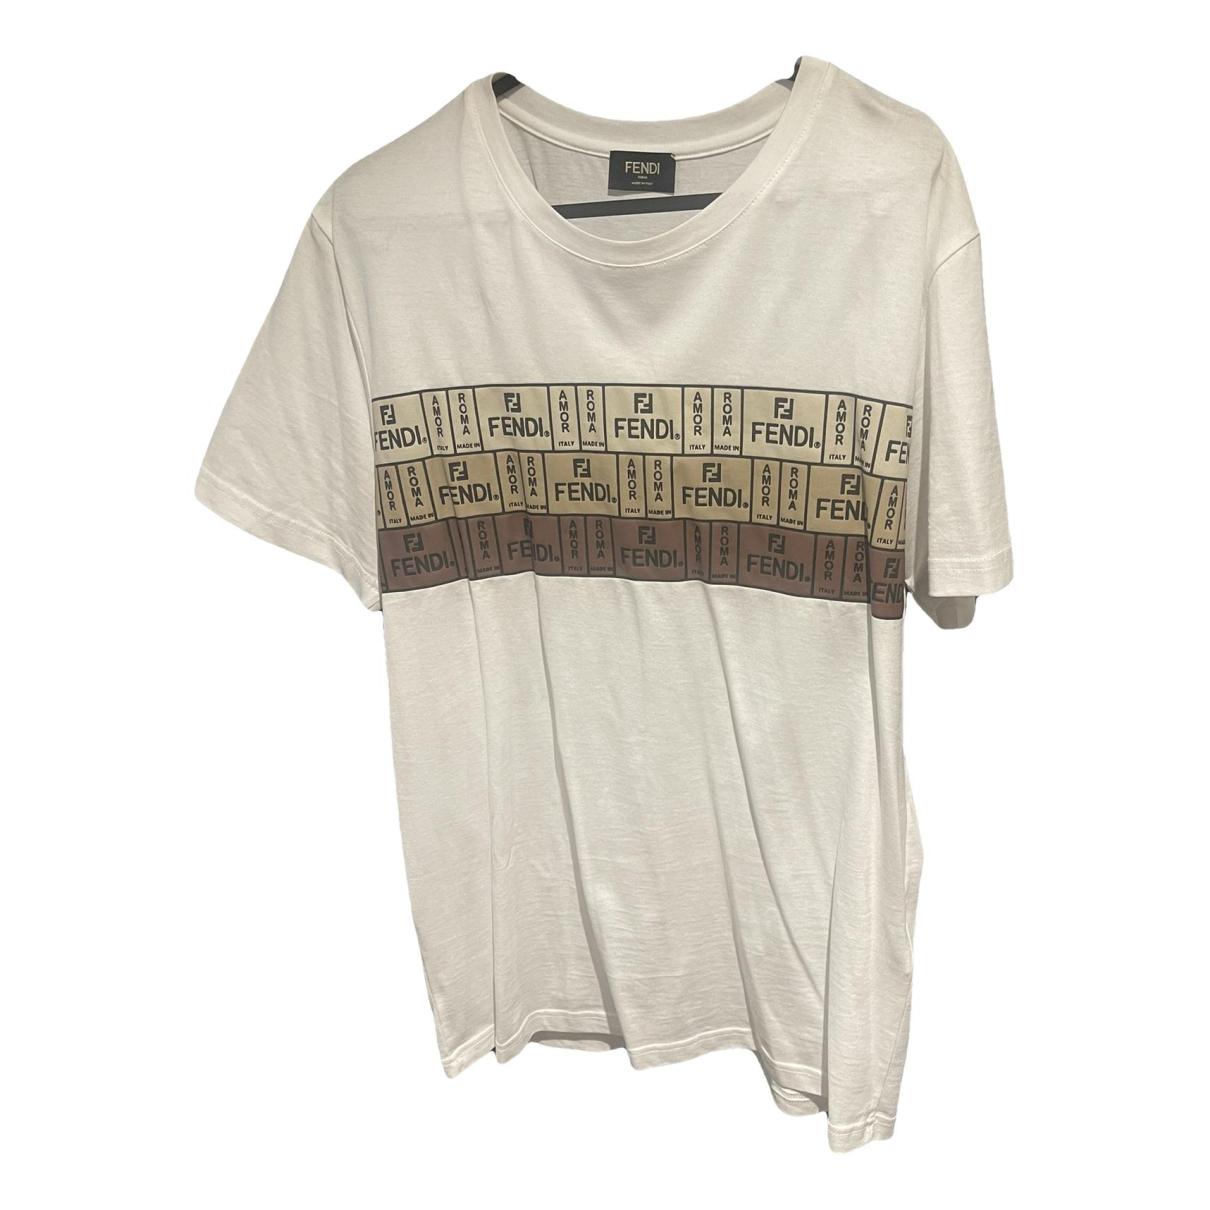 T-shirt Fendi White size L International in Cotton - 34875249